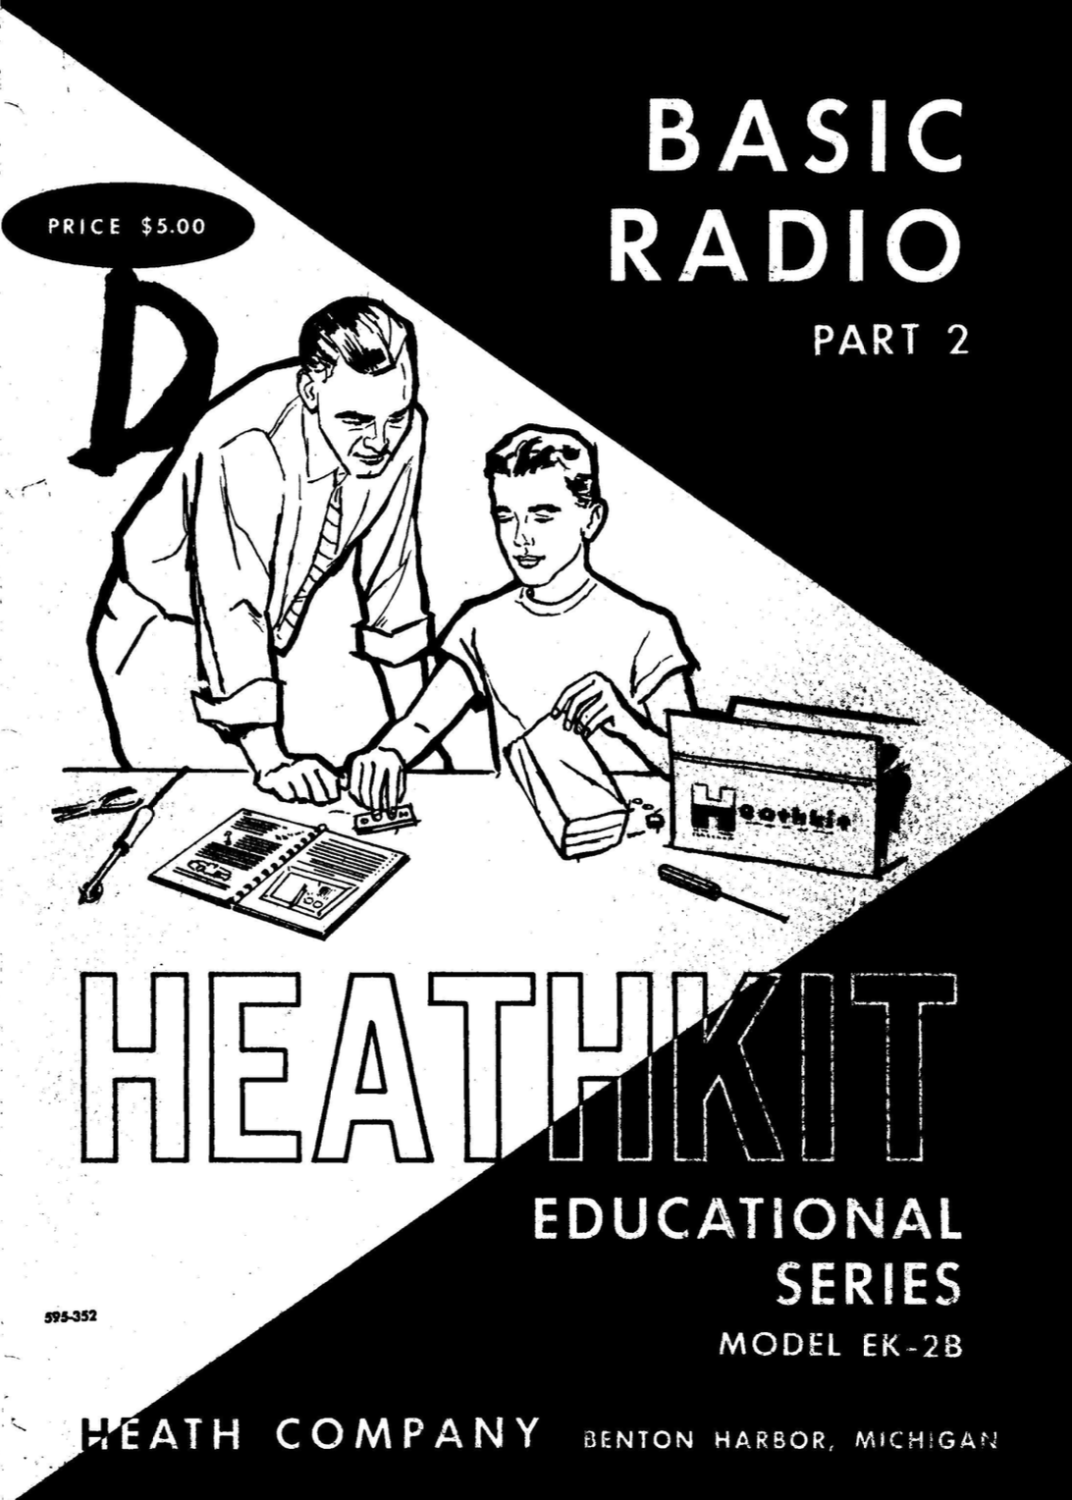 Heathkit EK-2B - Heathkit Educational Series - Basic Radio Part 2